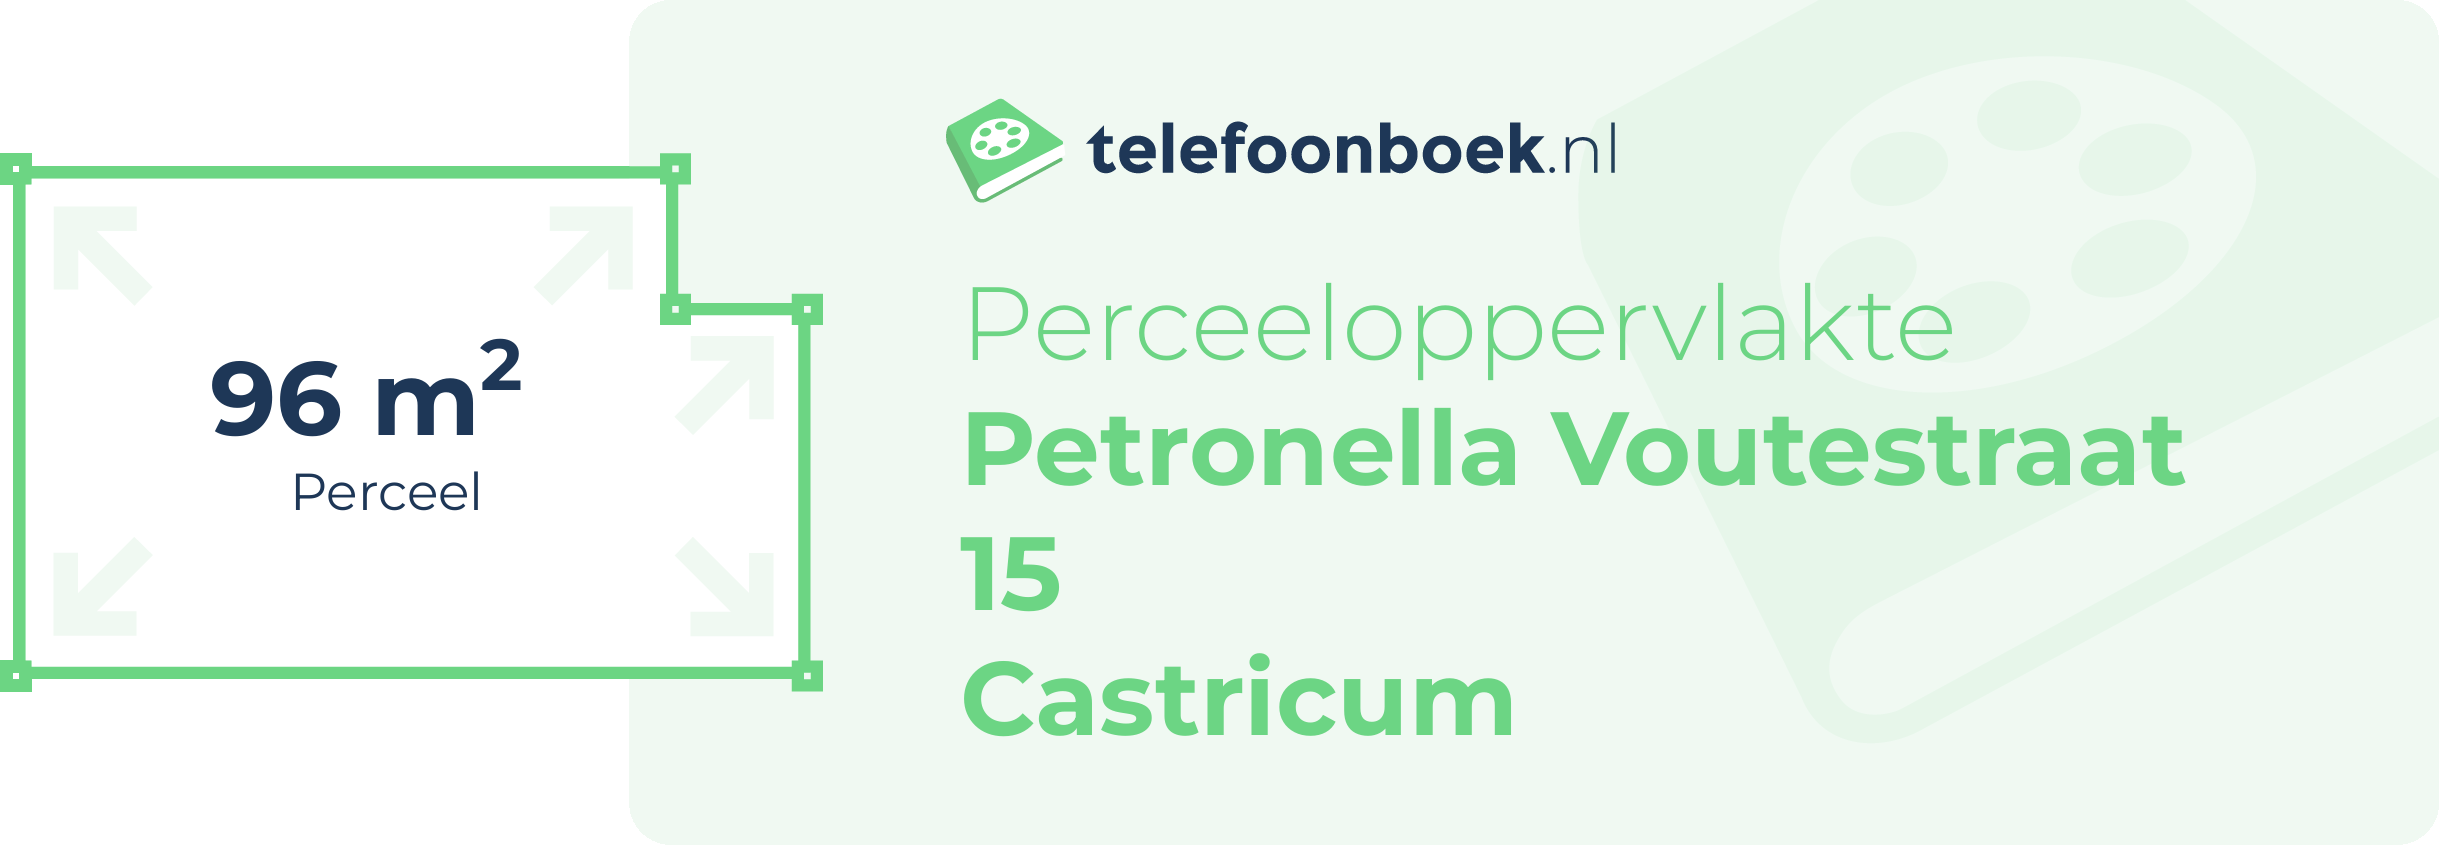 Perceeloppervlakte Petronella Voutestraat 15 Castricum